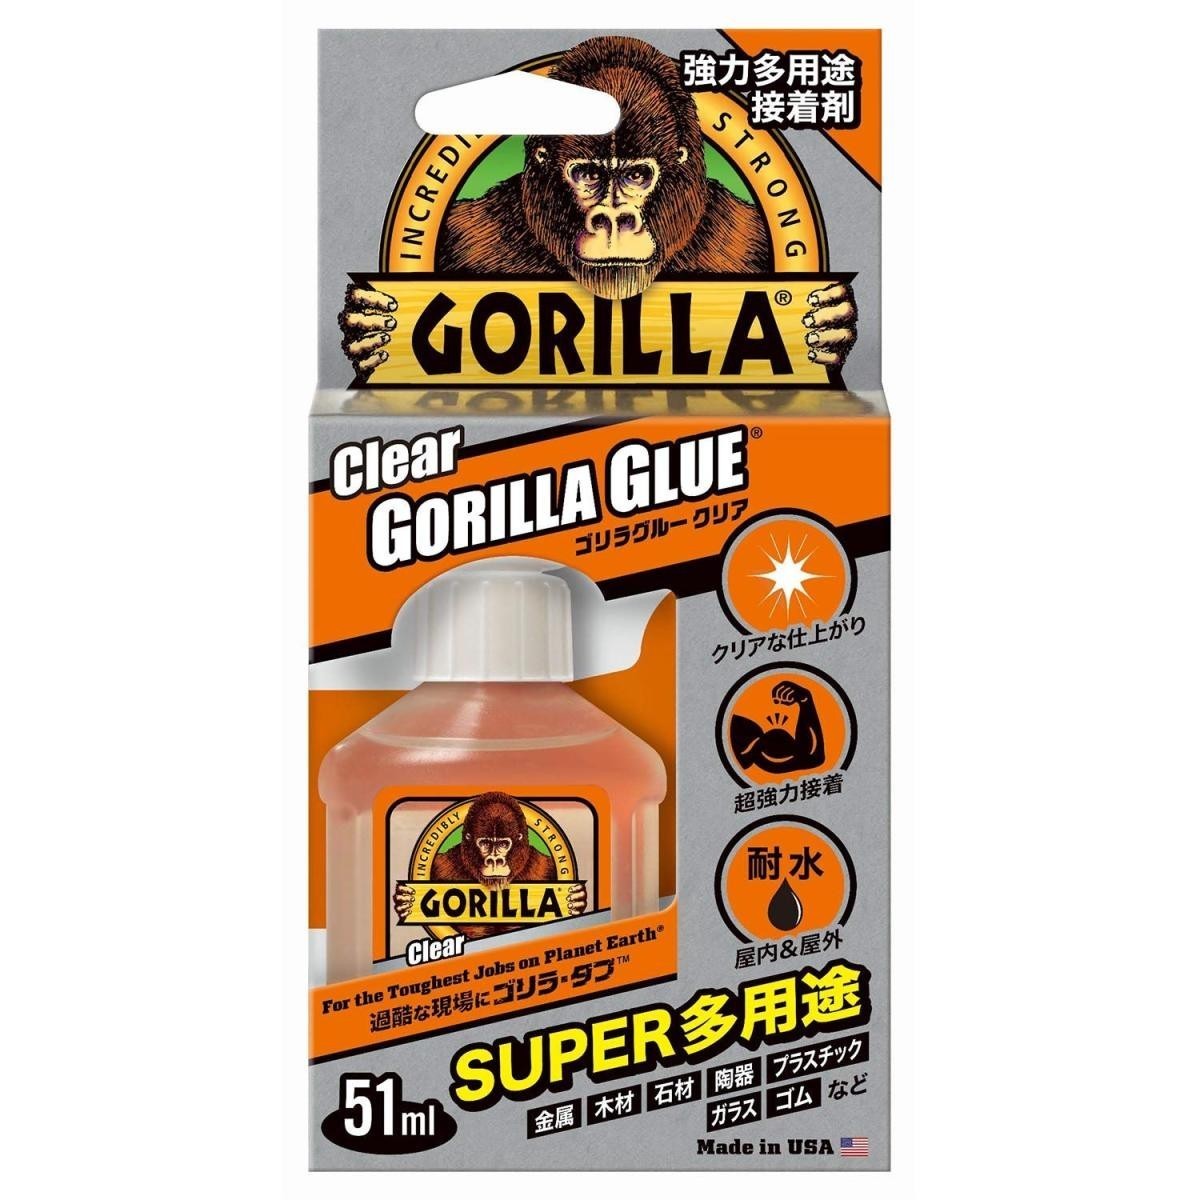 KURE. industry Gorilla glue clear 51ml super powerful multi-purpose adhesive No.1770